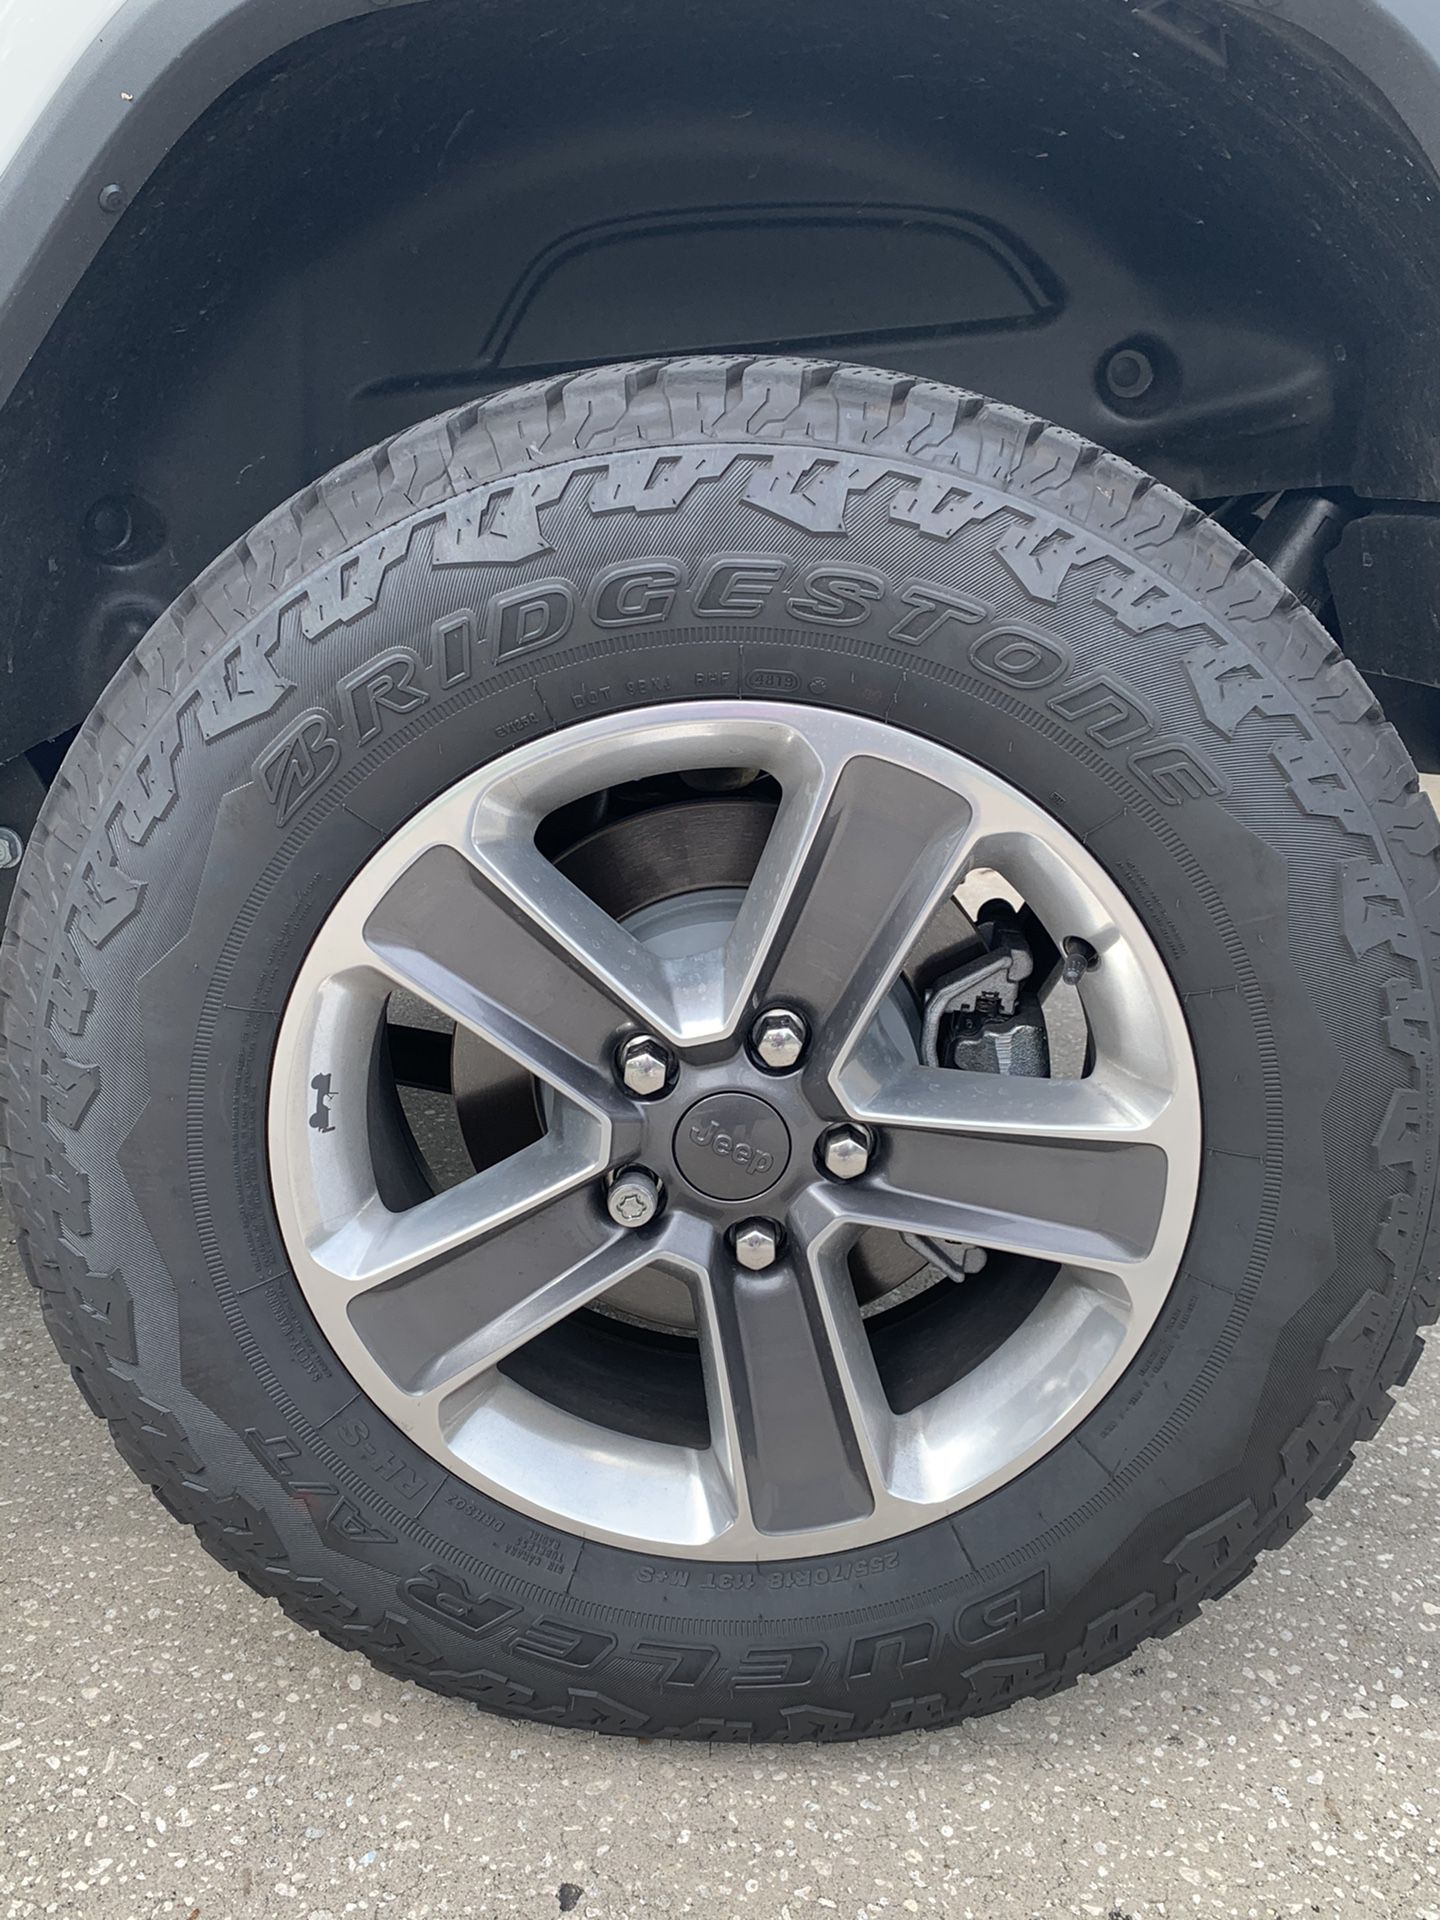 Barely used Bridgestone tires with wheels